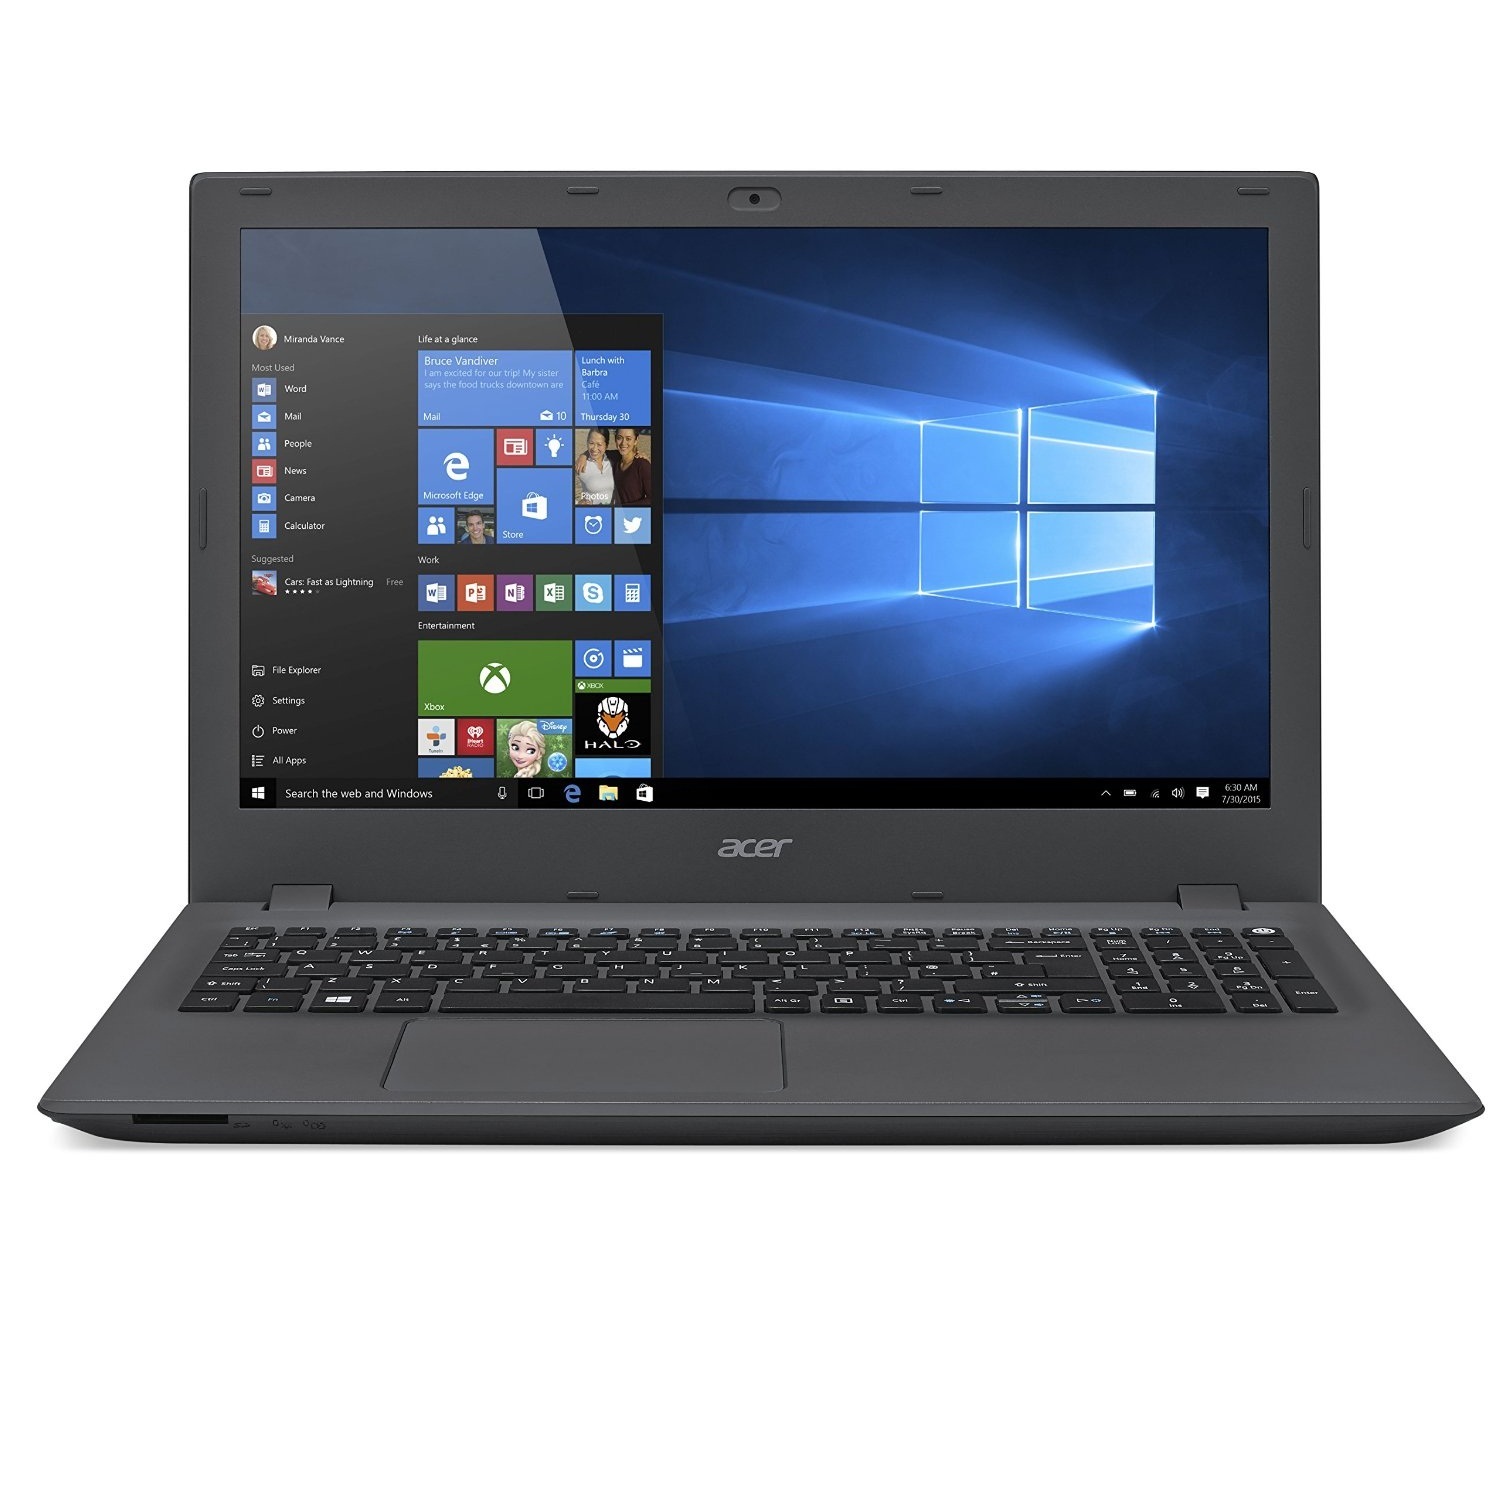 Laptop ACER AS E5-574G-58H2 (NX.G3HSV.001)